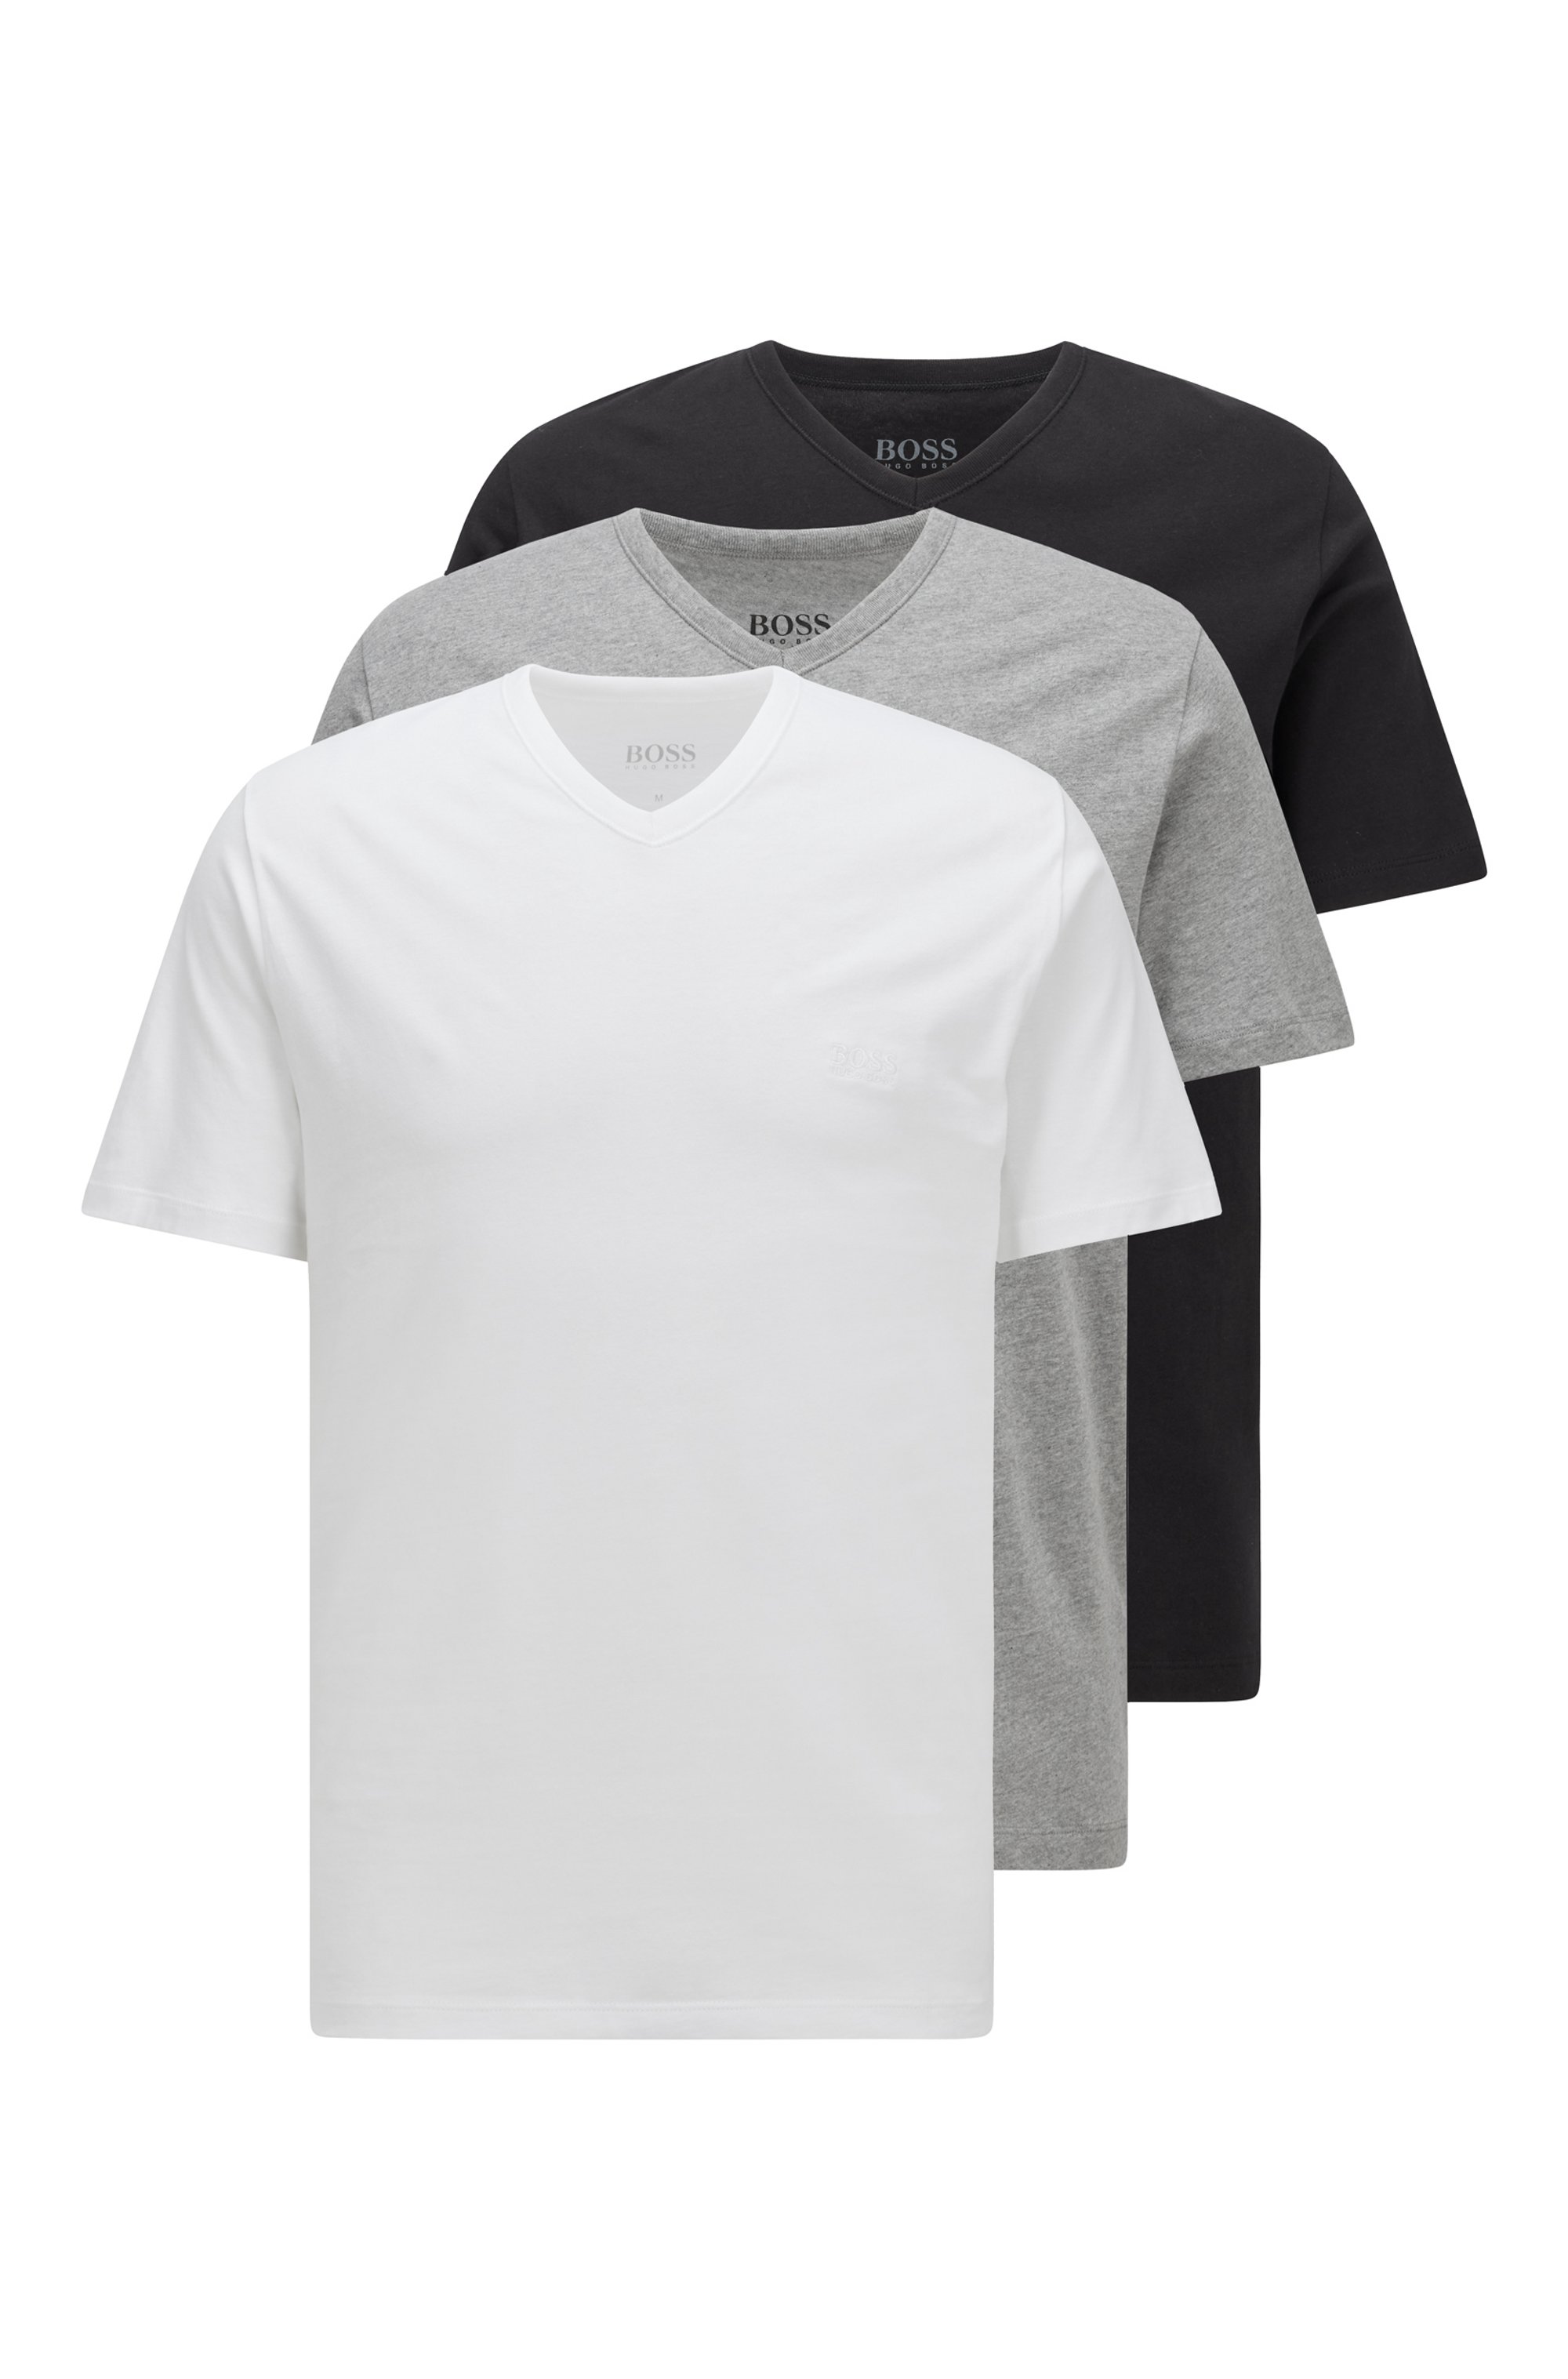 Three-pack of V-neck underwear T-shirts in cotton, White / Grey / Black